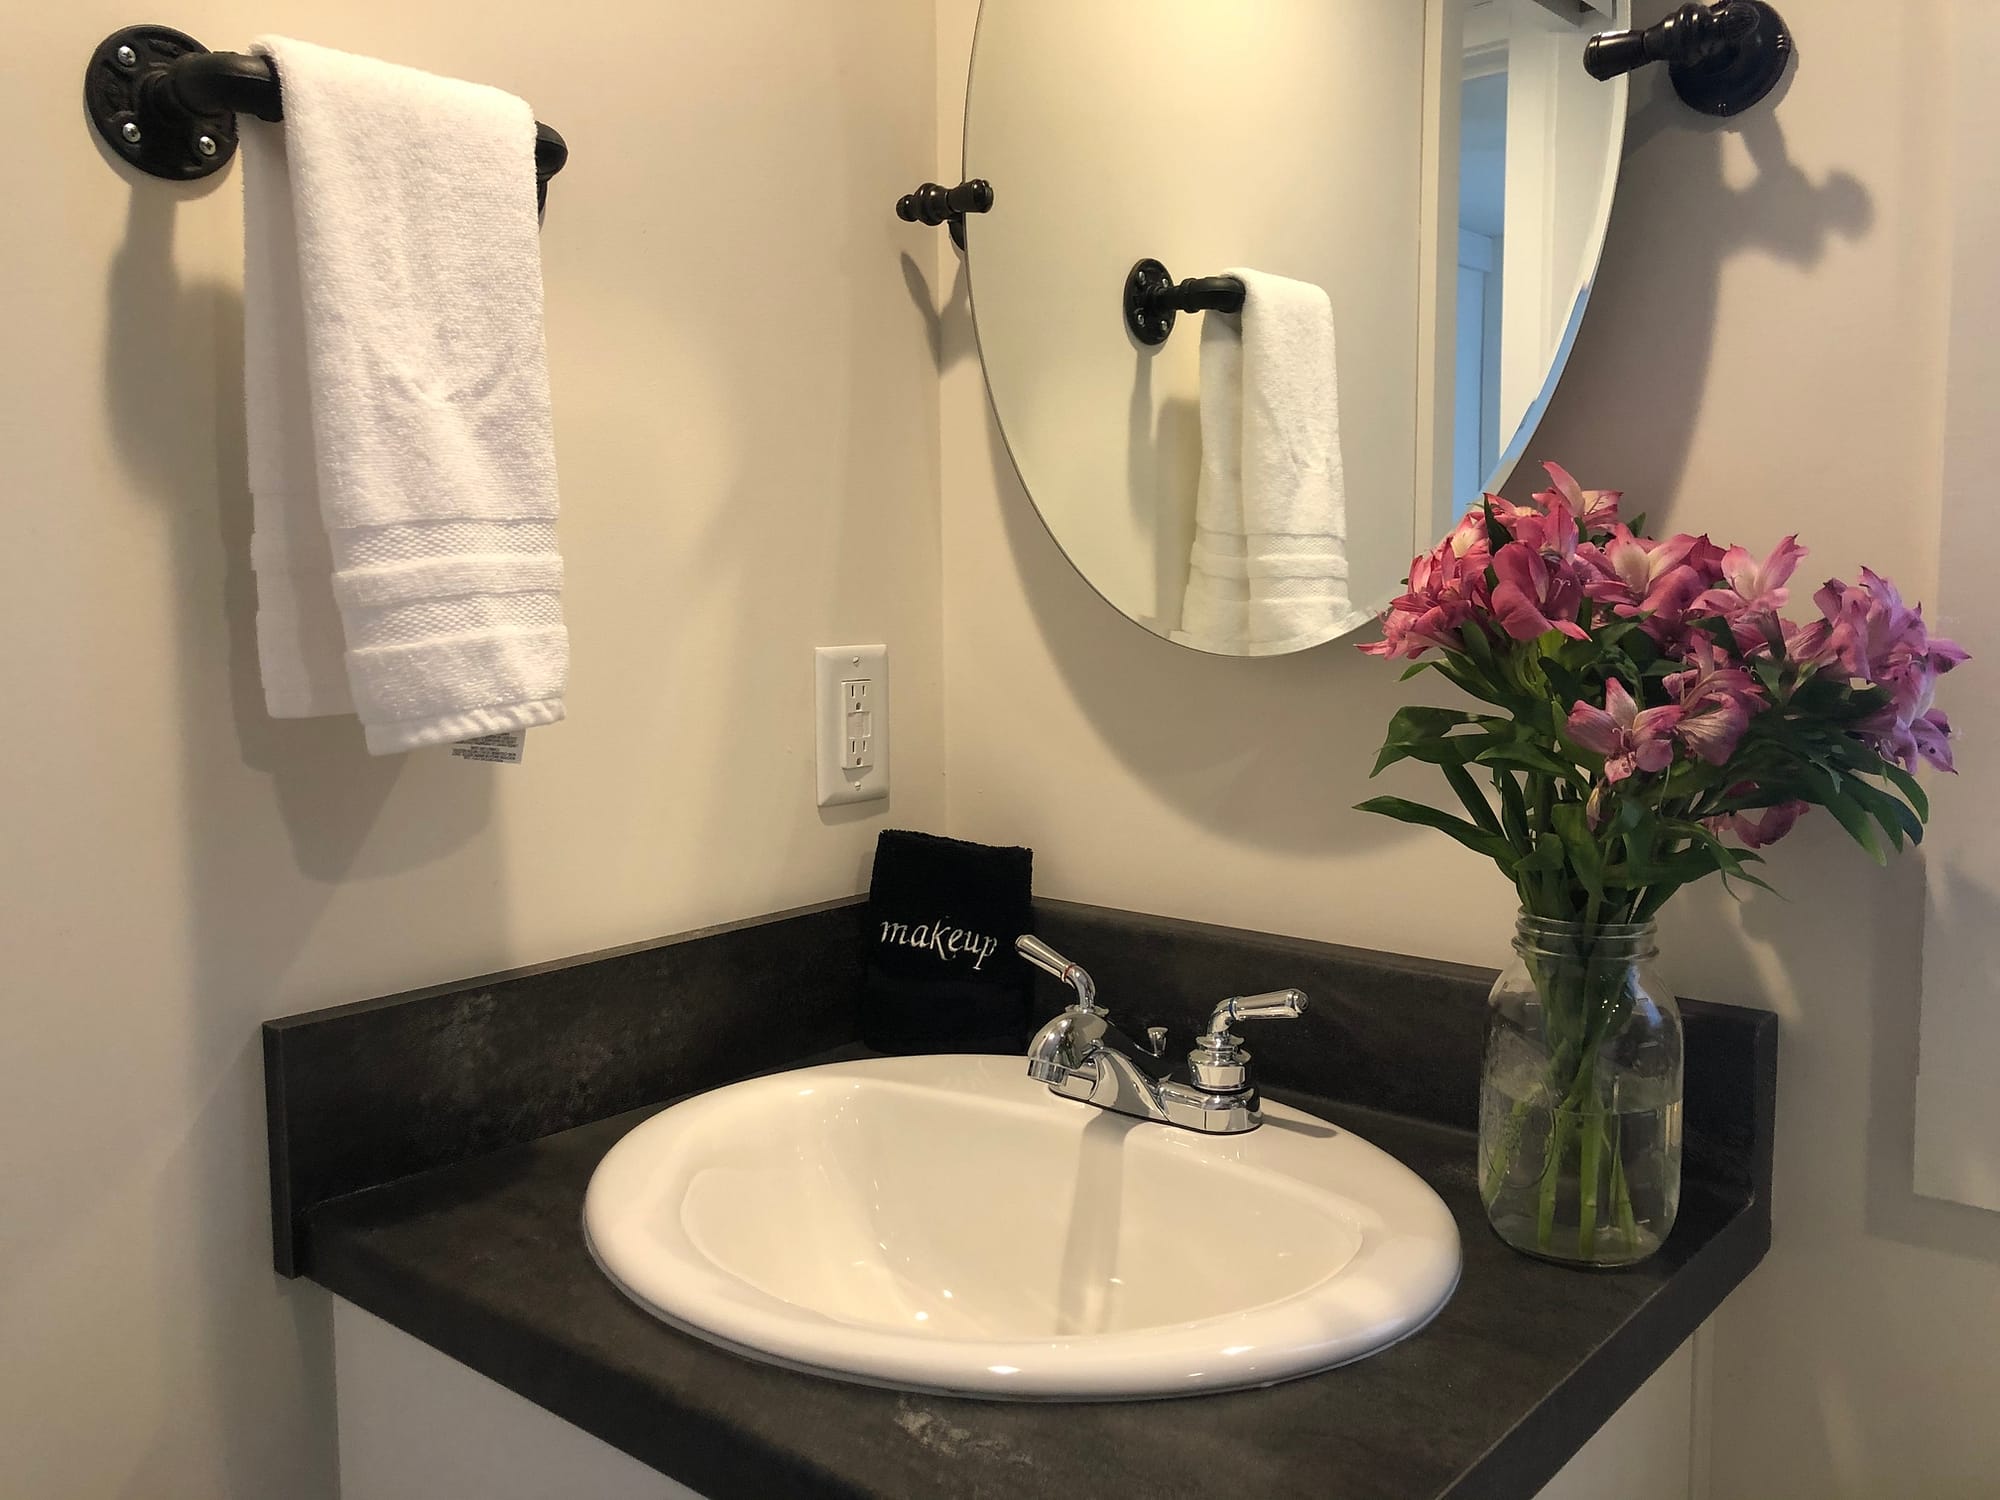 bathroom sink with towel and flower vase